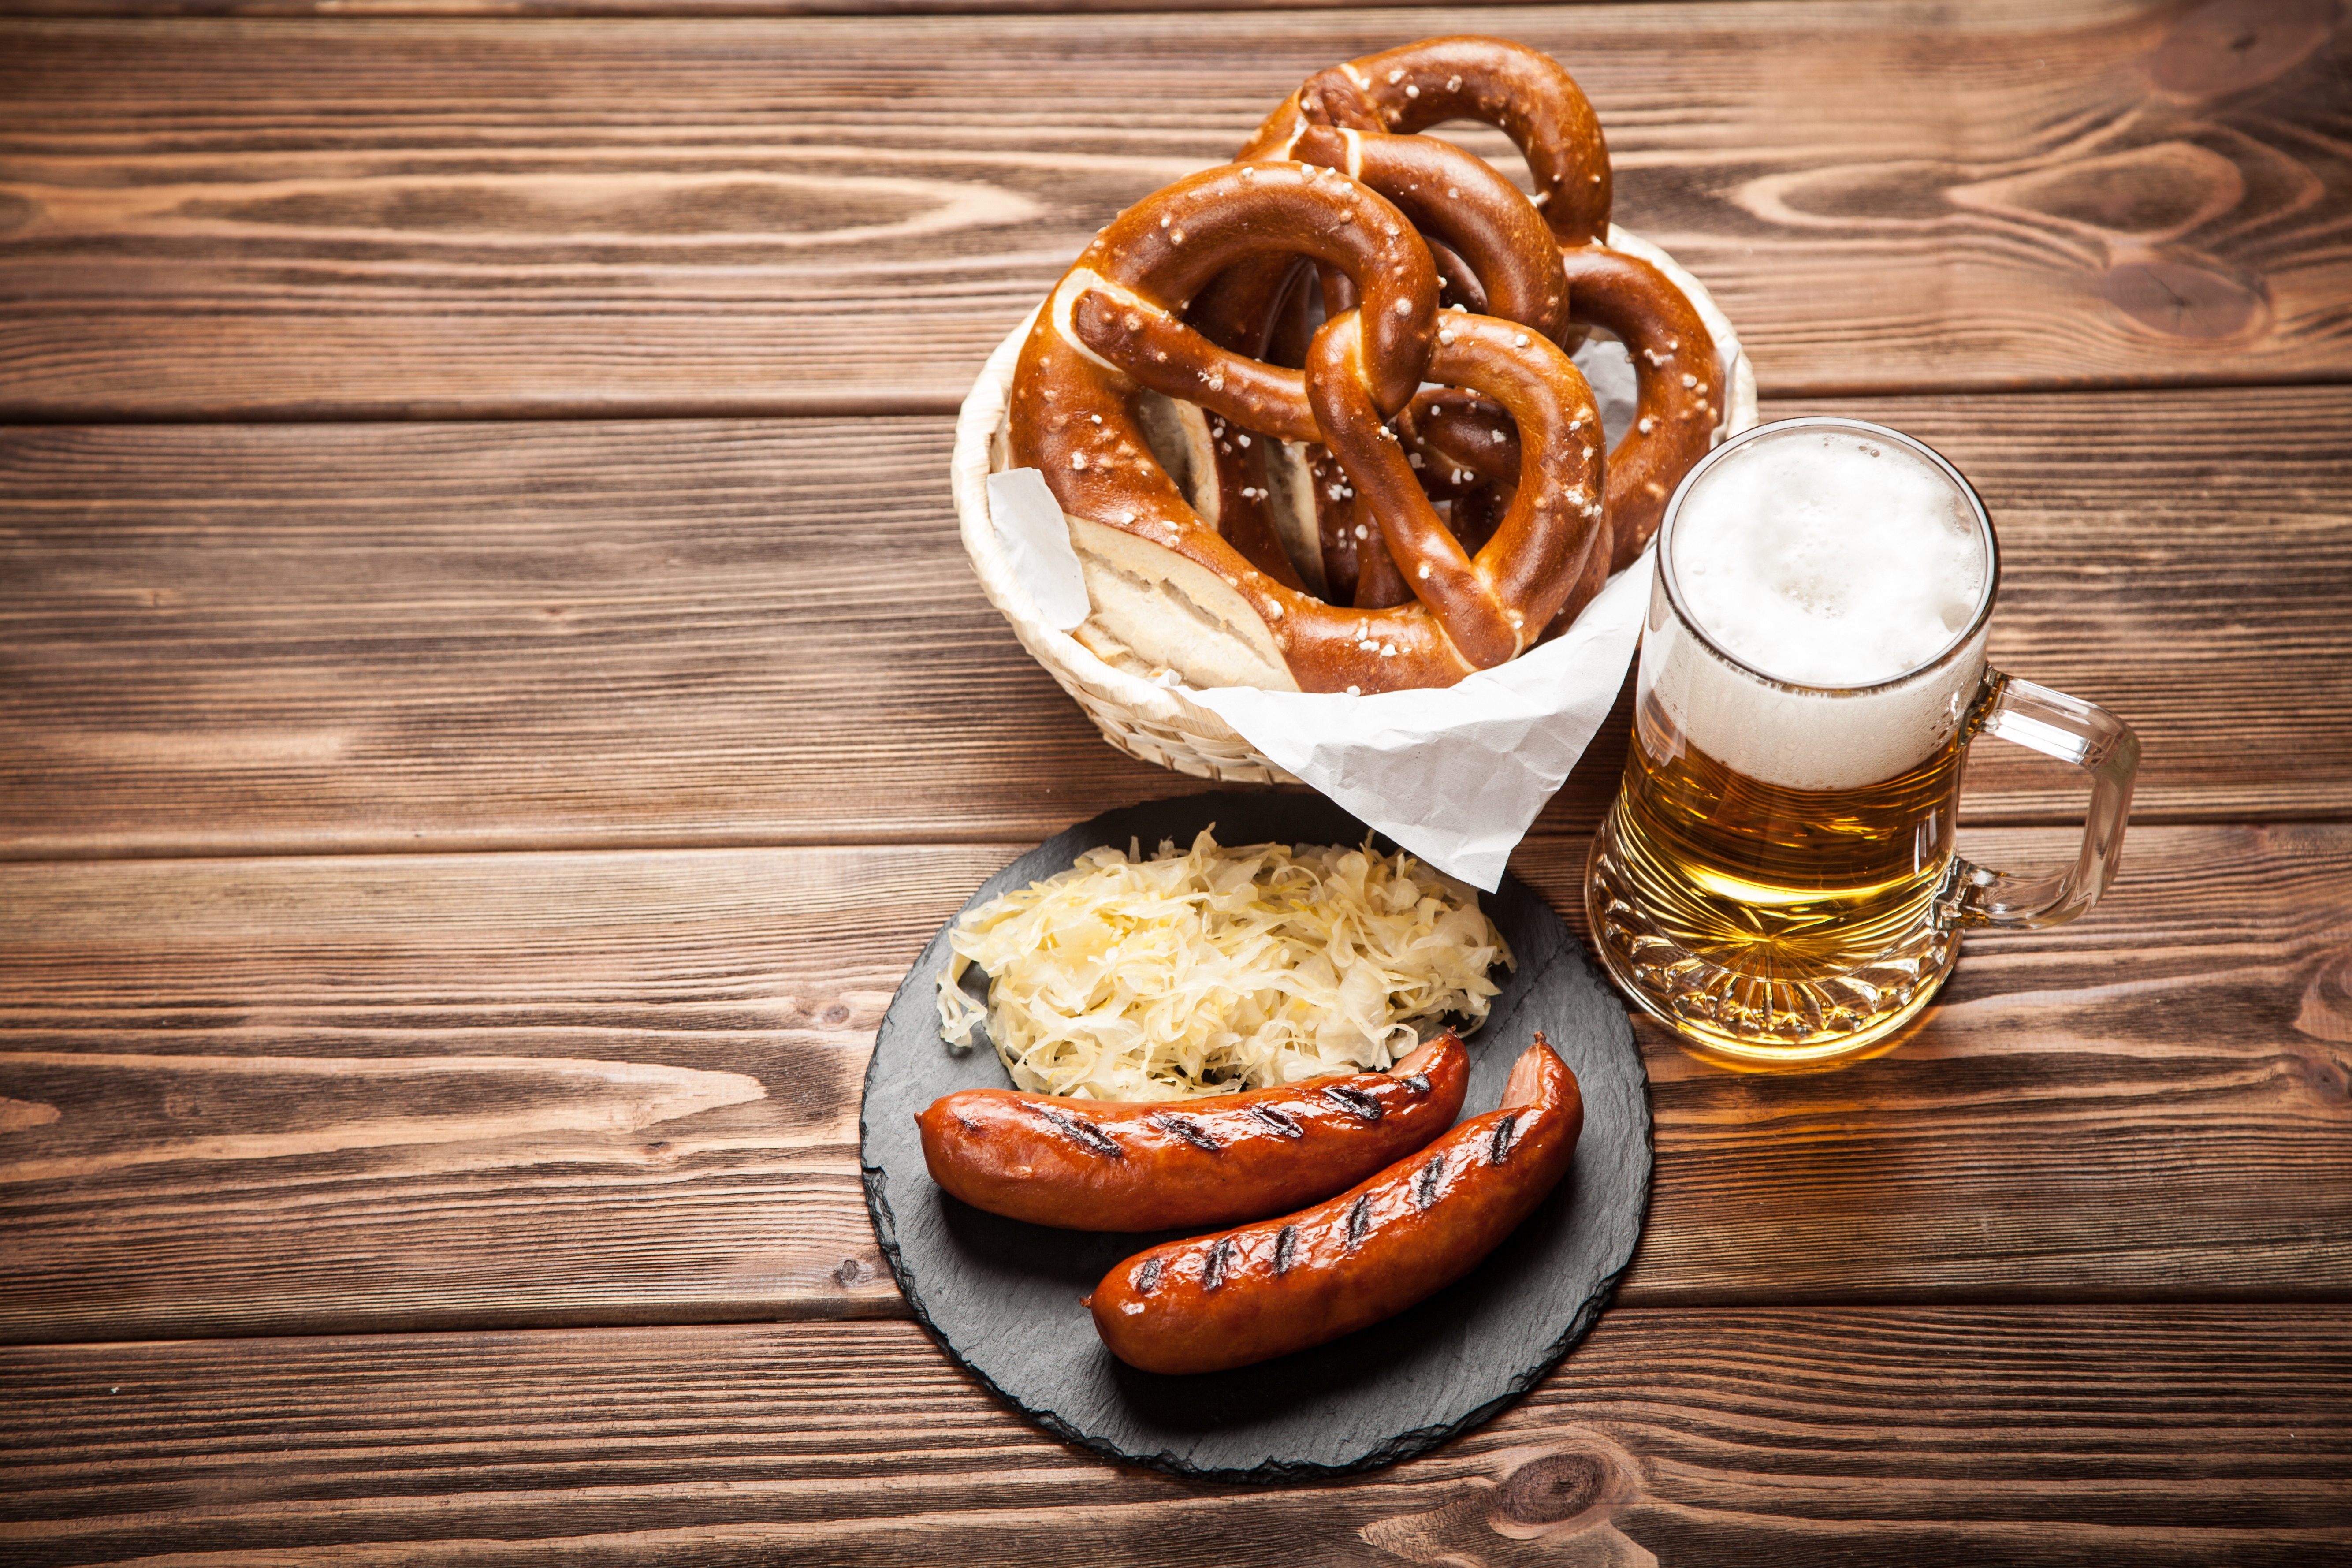 Traditional german food of pretzels, sauerkraut, bratwurst and beer on wooden table